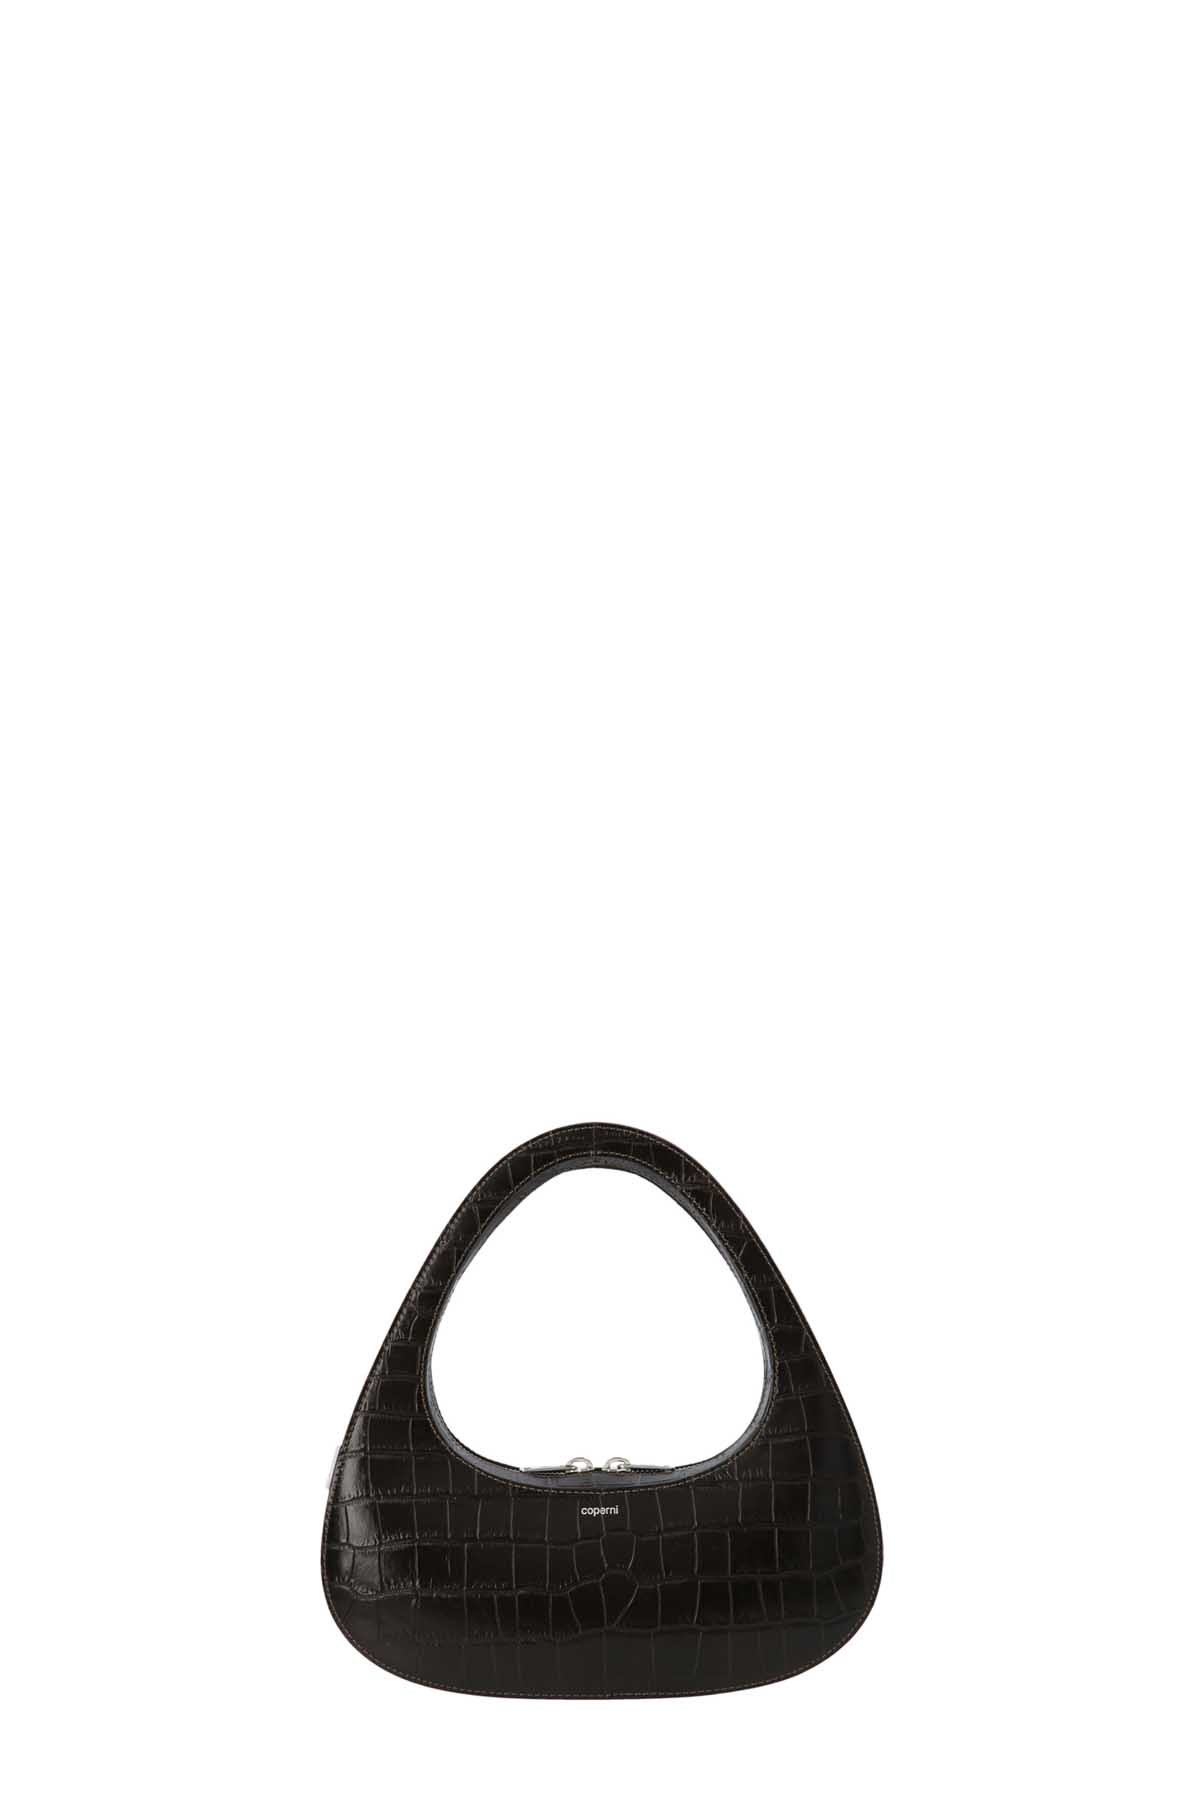 COPERNI 'Croc Baguette Swipe’ Handbag